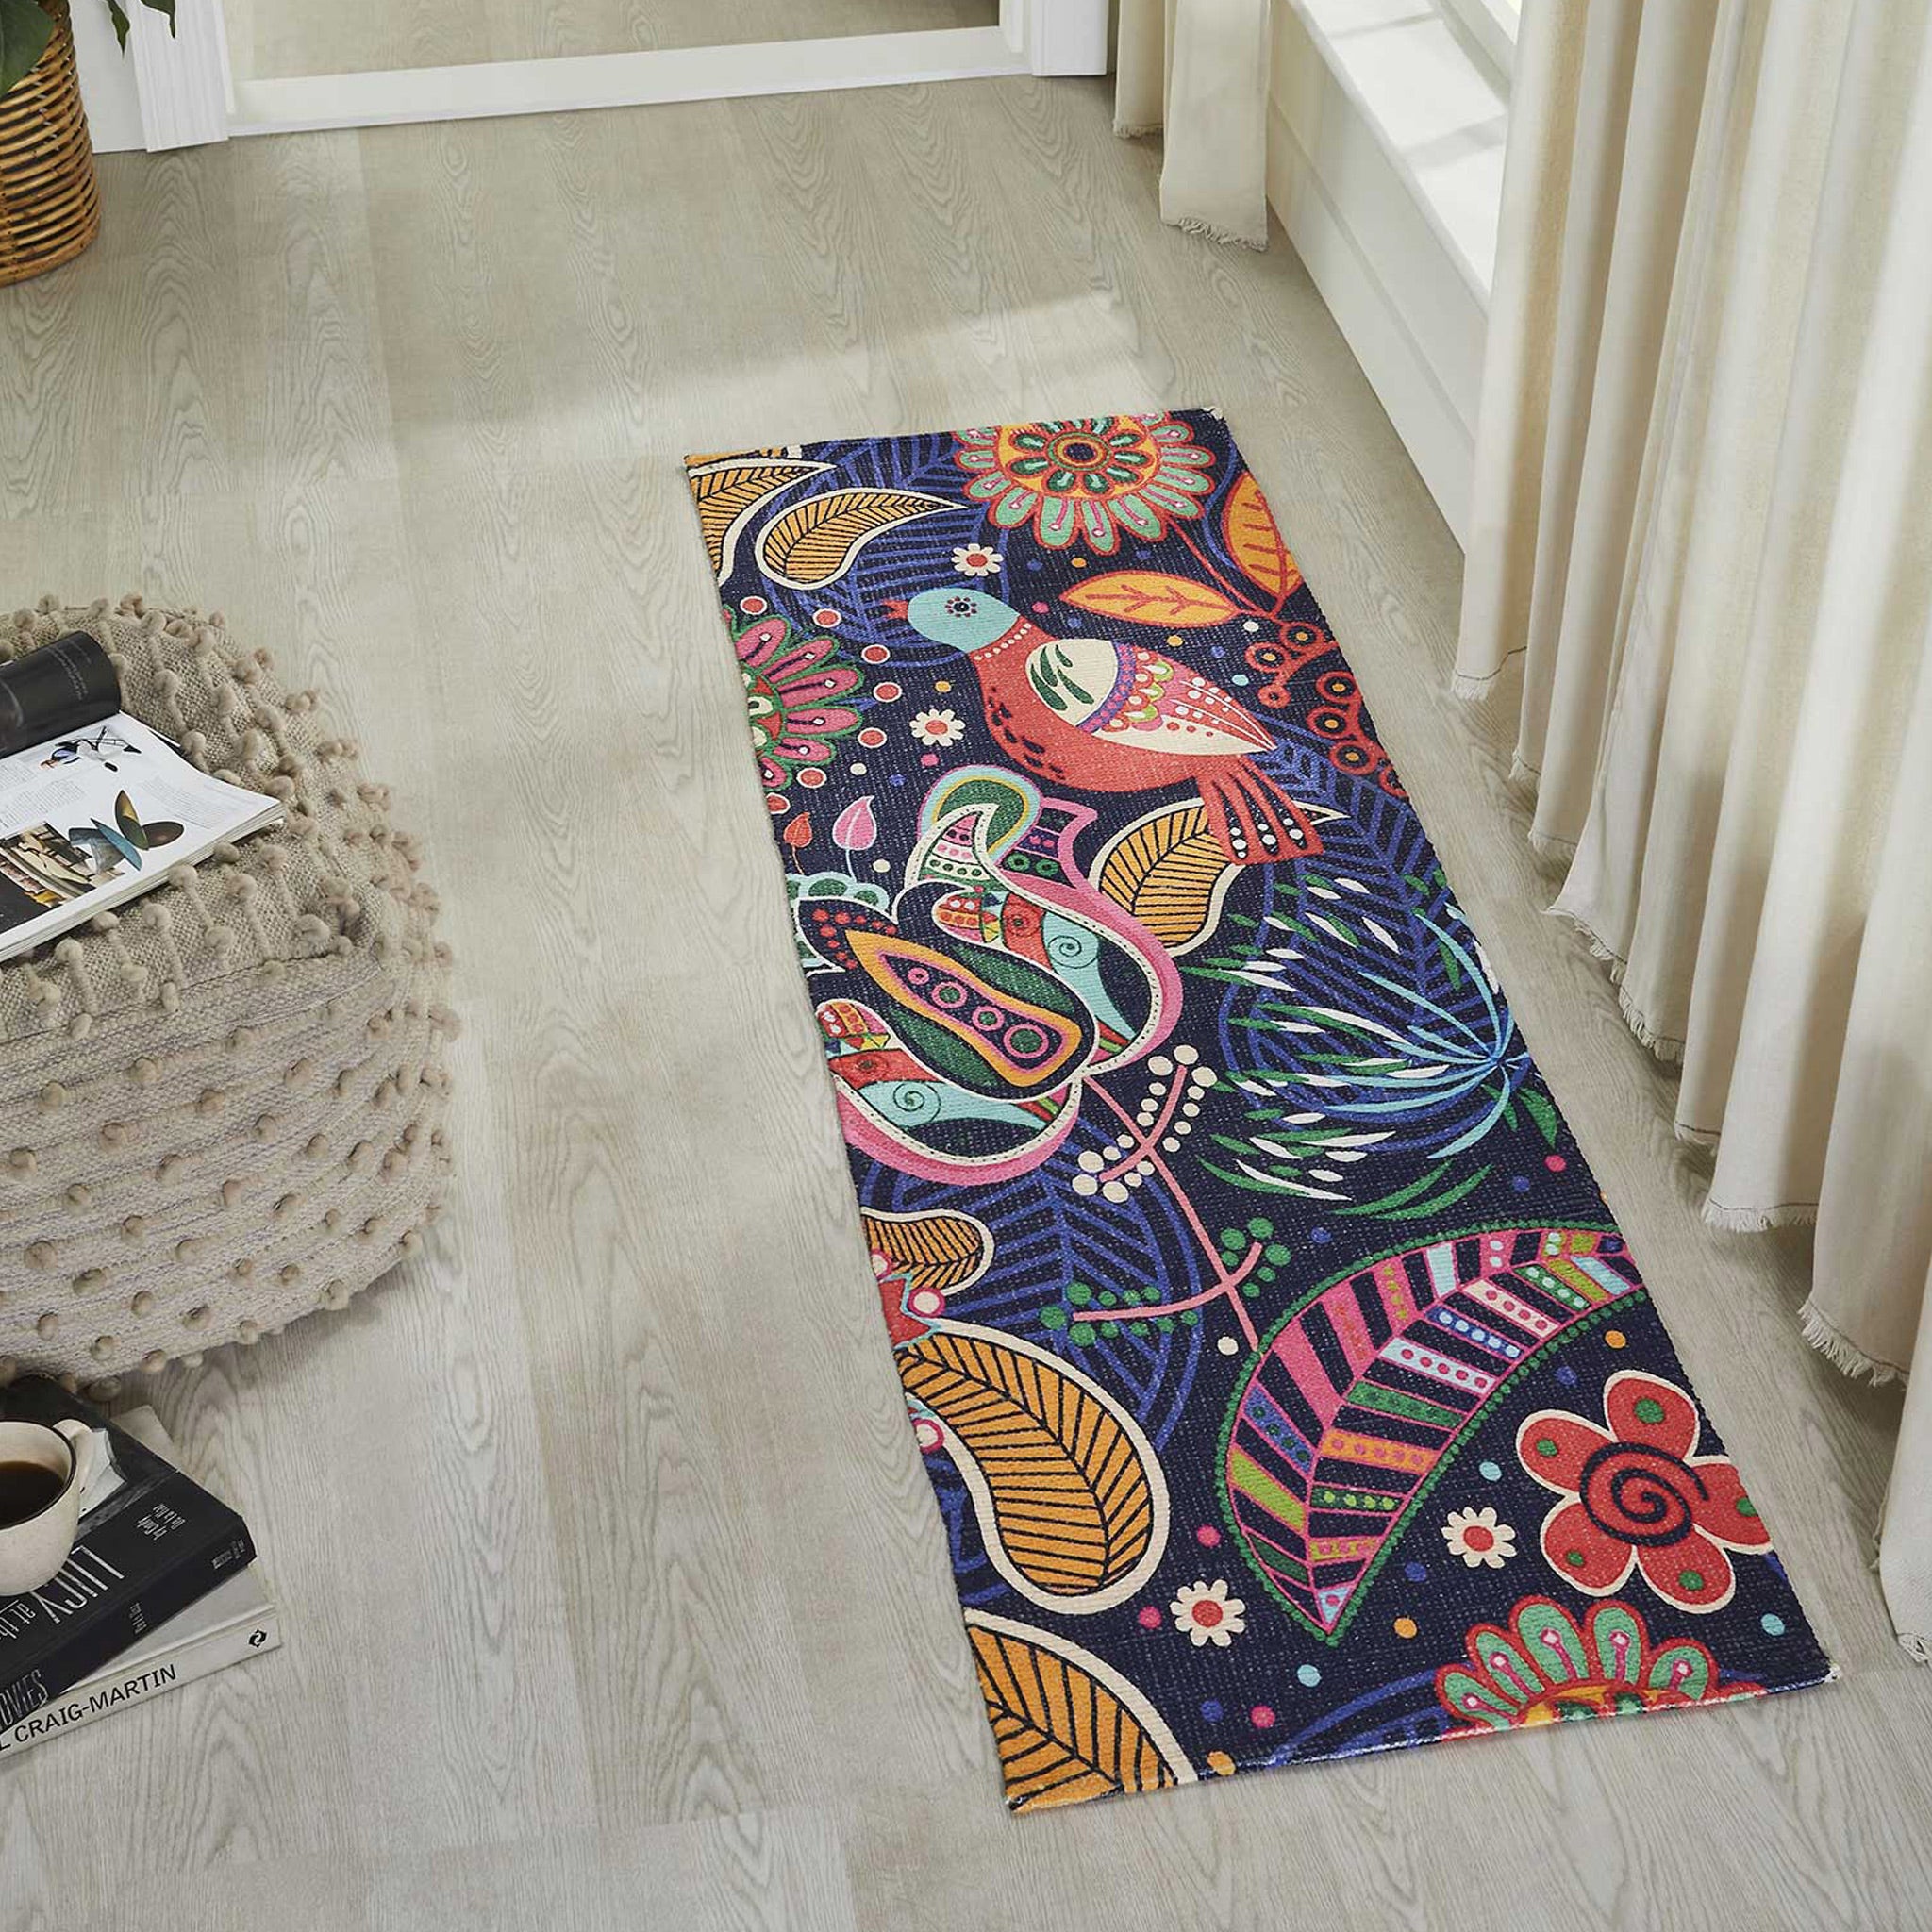 Mona B Printed Vintage Dhurrie Carpet Rug Runner for Living Room Bedroom: 1.83 X 6 Feet Multi Color - PR-111 (2272)